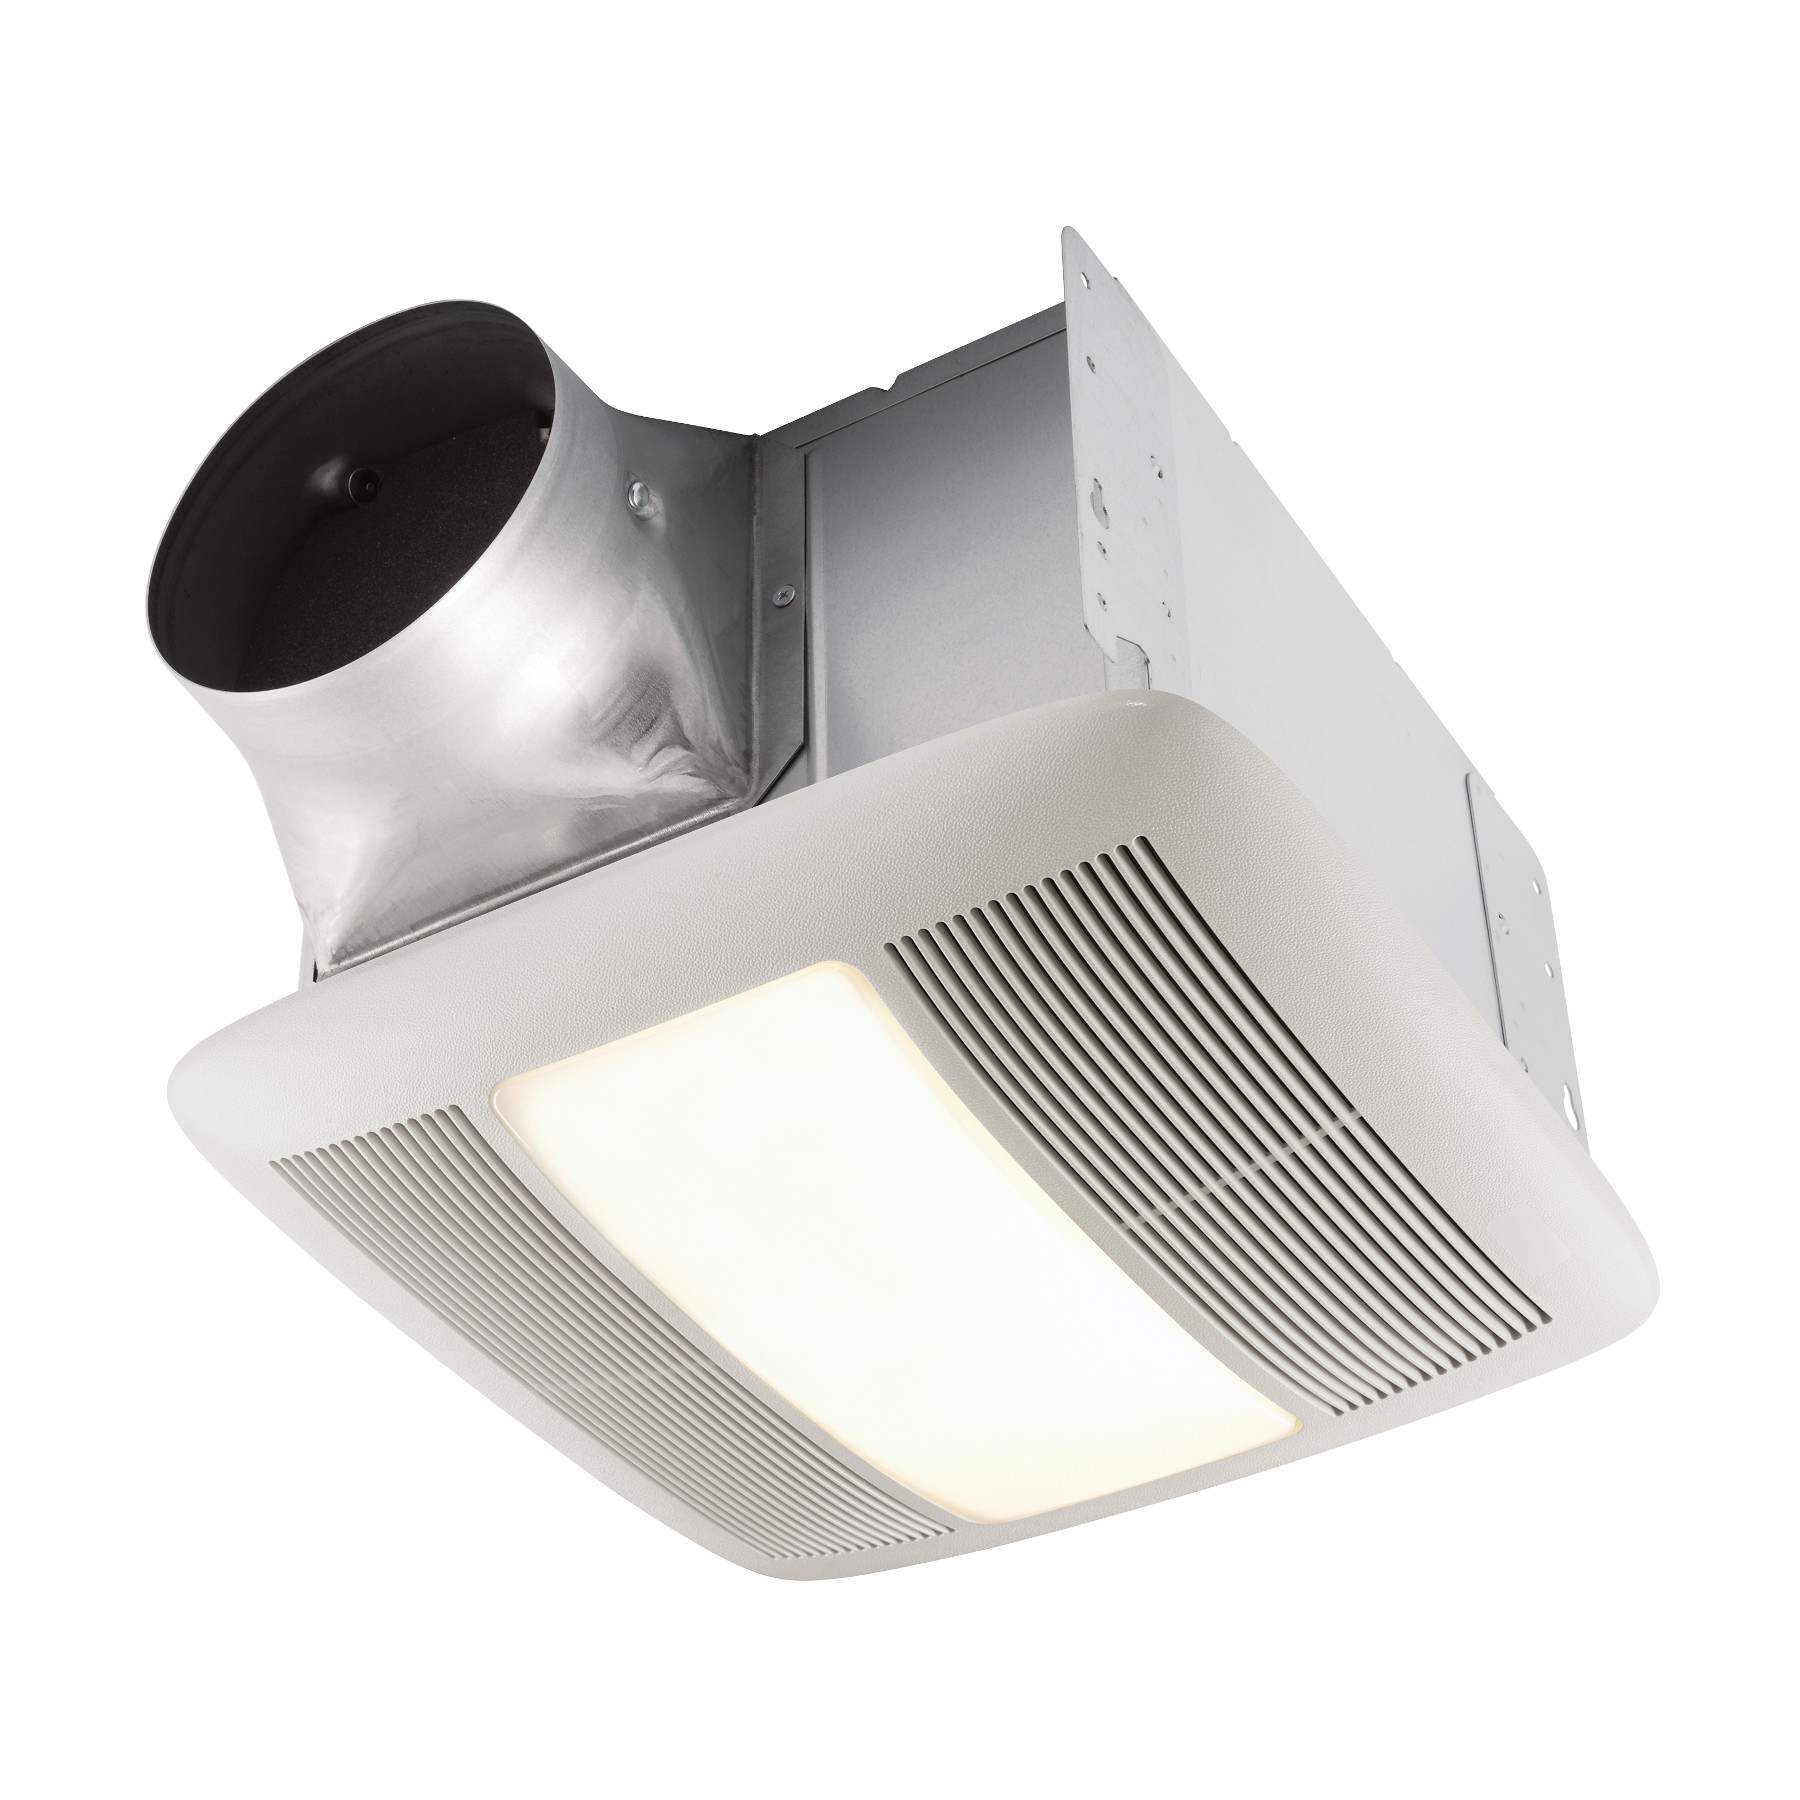 Qt140le Broan 140 Cfm Ventilation Fan Light With Night Lightquiet